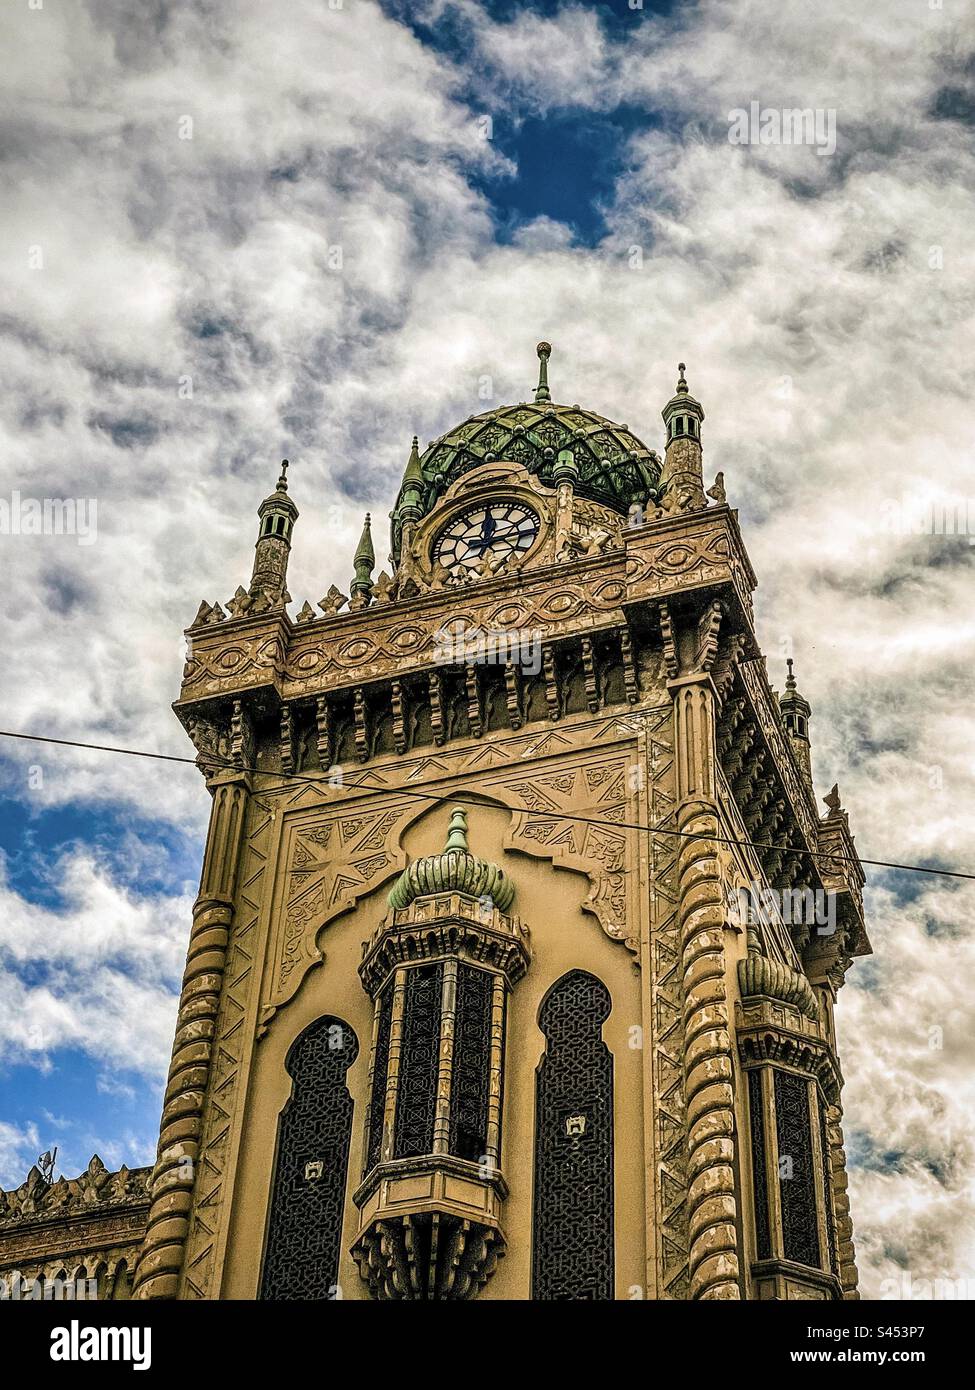 Clock tower of The Forum, Melbourne, Australia against cloudy sky. Moorish revival exterior. Stock Photo